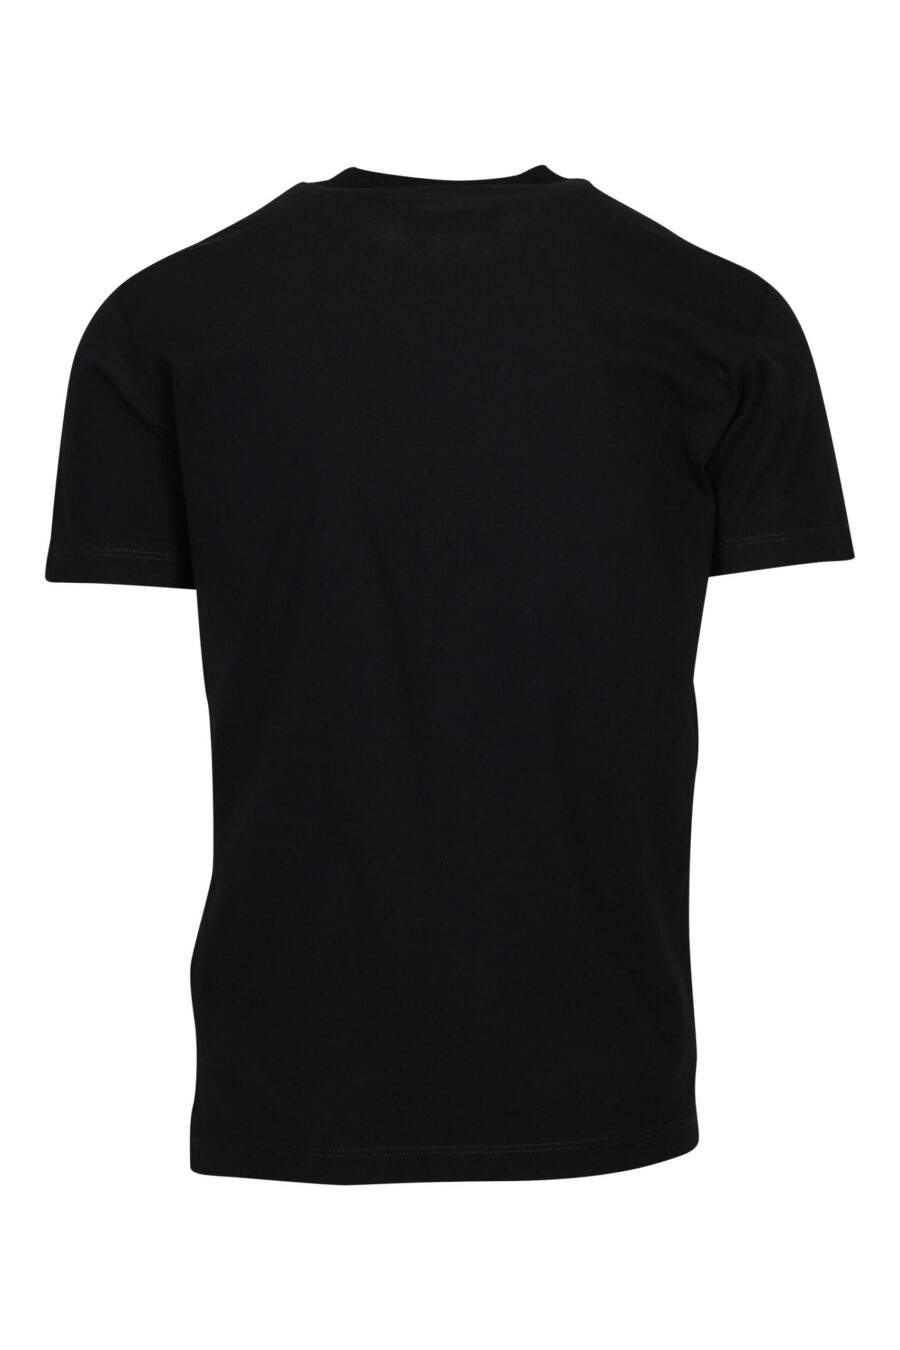 Camiseta negra con logo doblado "milano" - 8054148571047 1 scaled